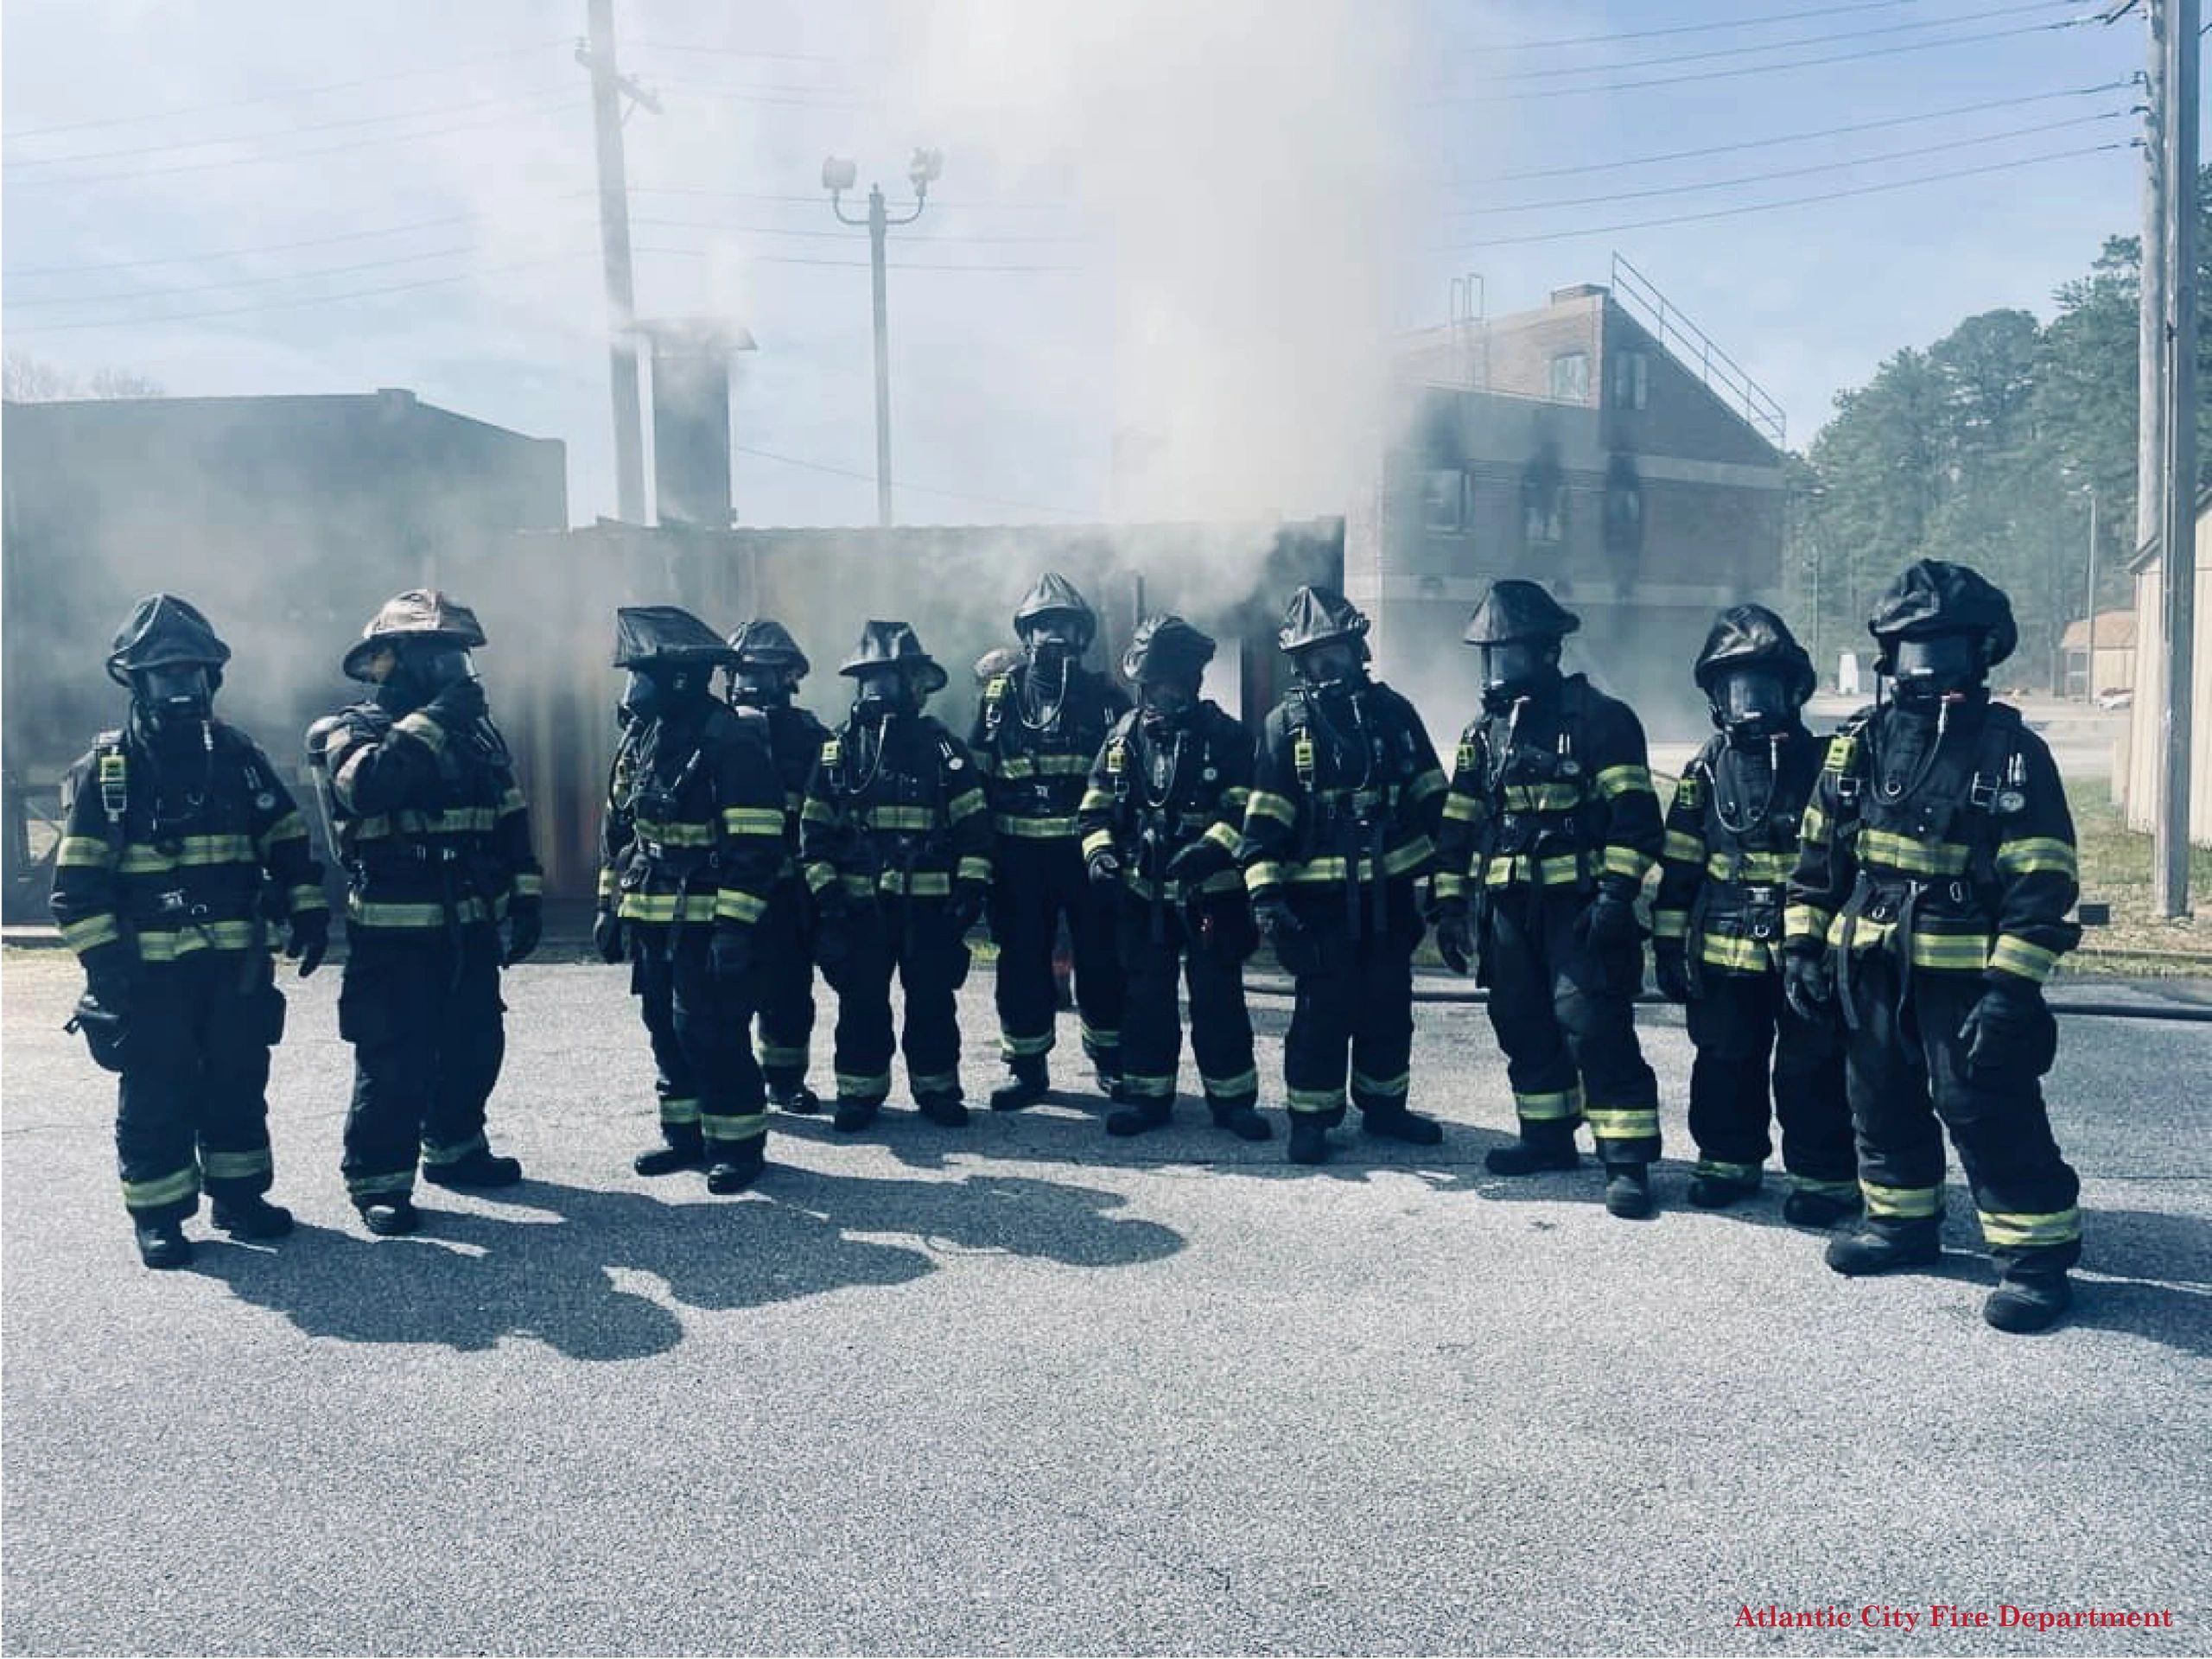 Atlantic City Fire Department Smokehouse